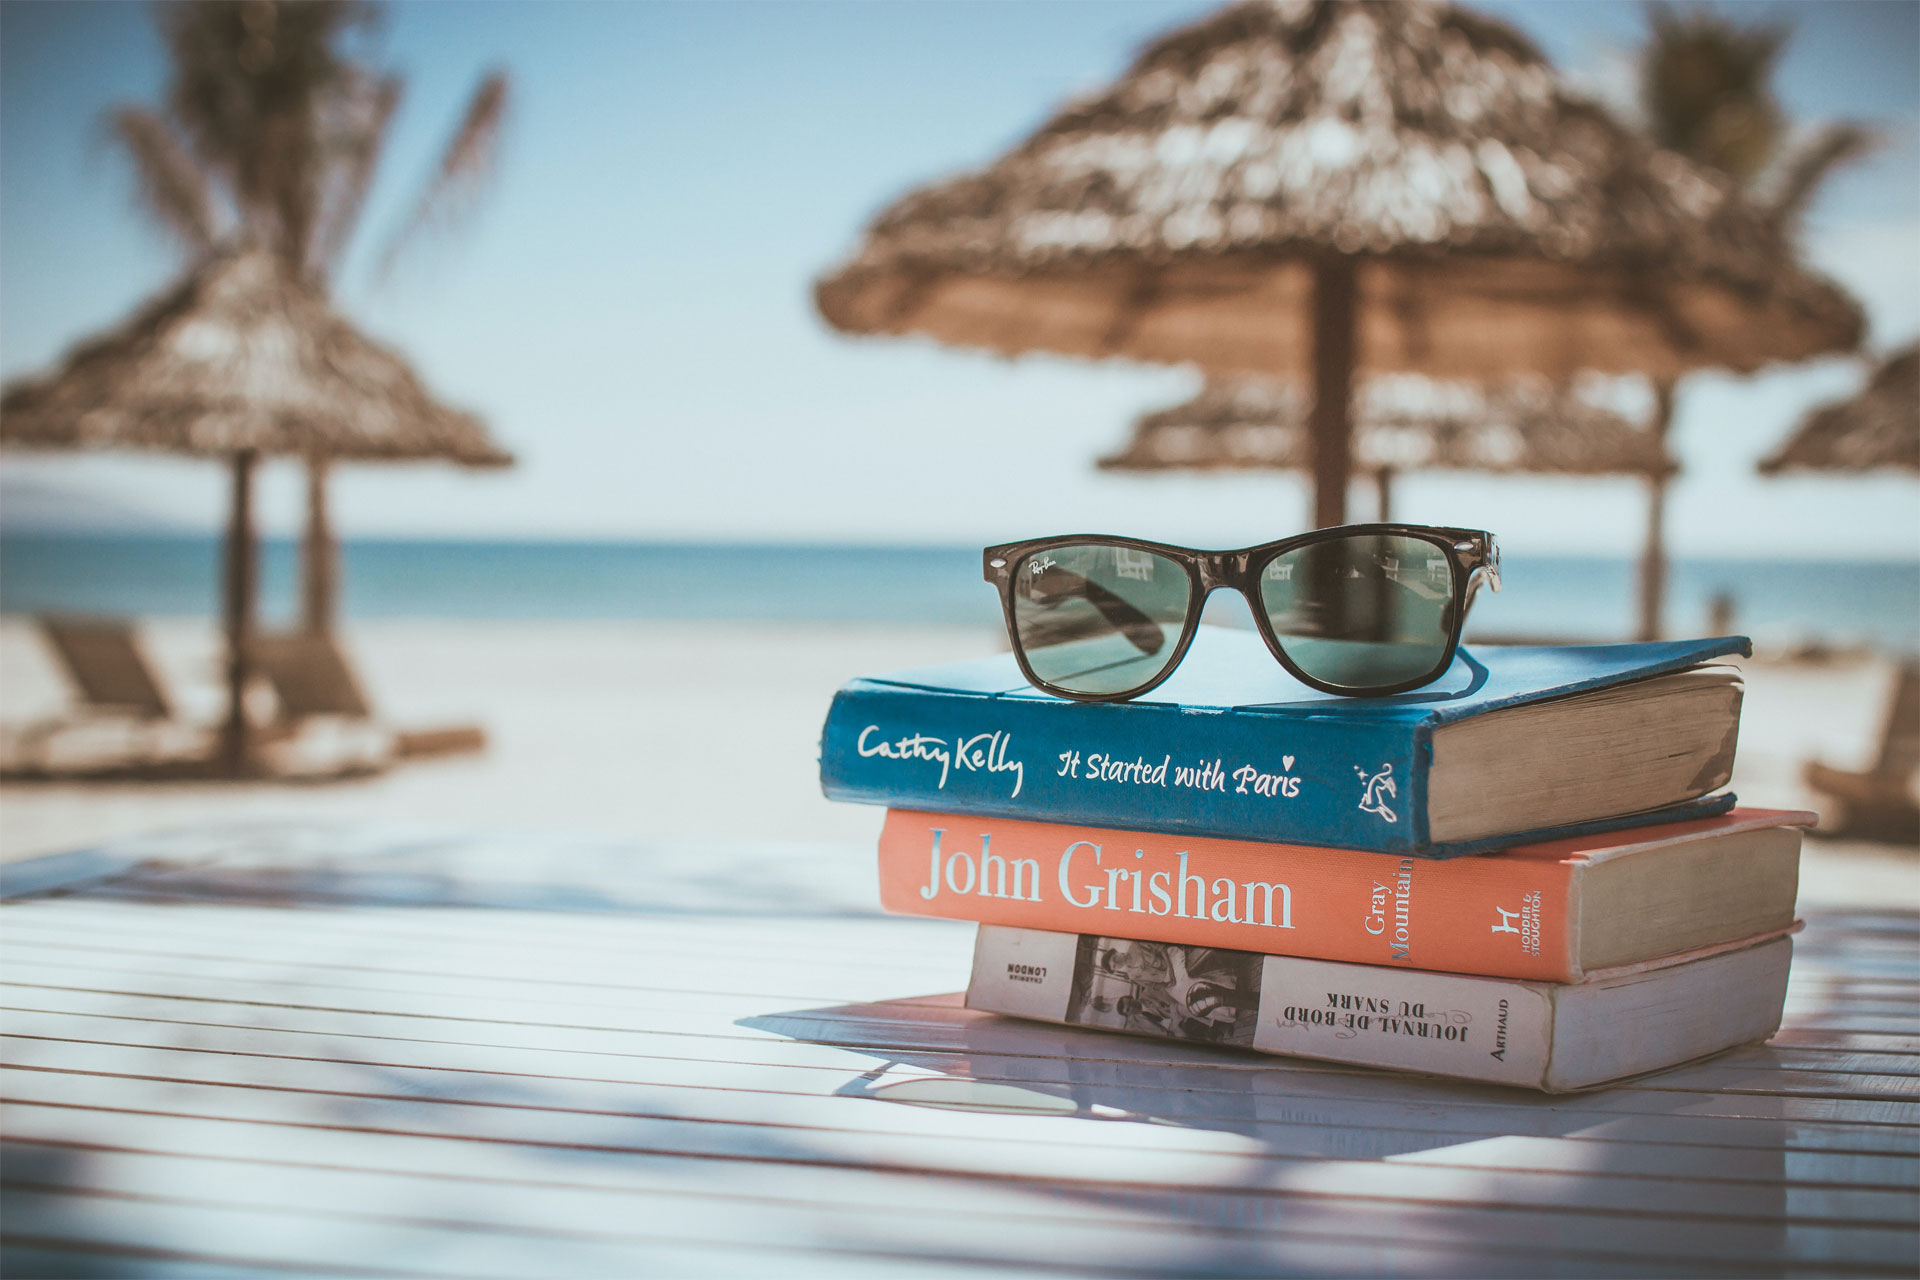 Books on a beach - Summer Reads